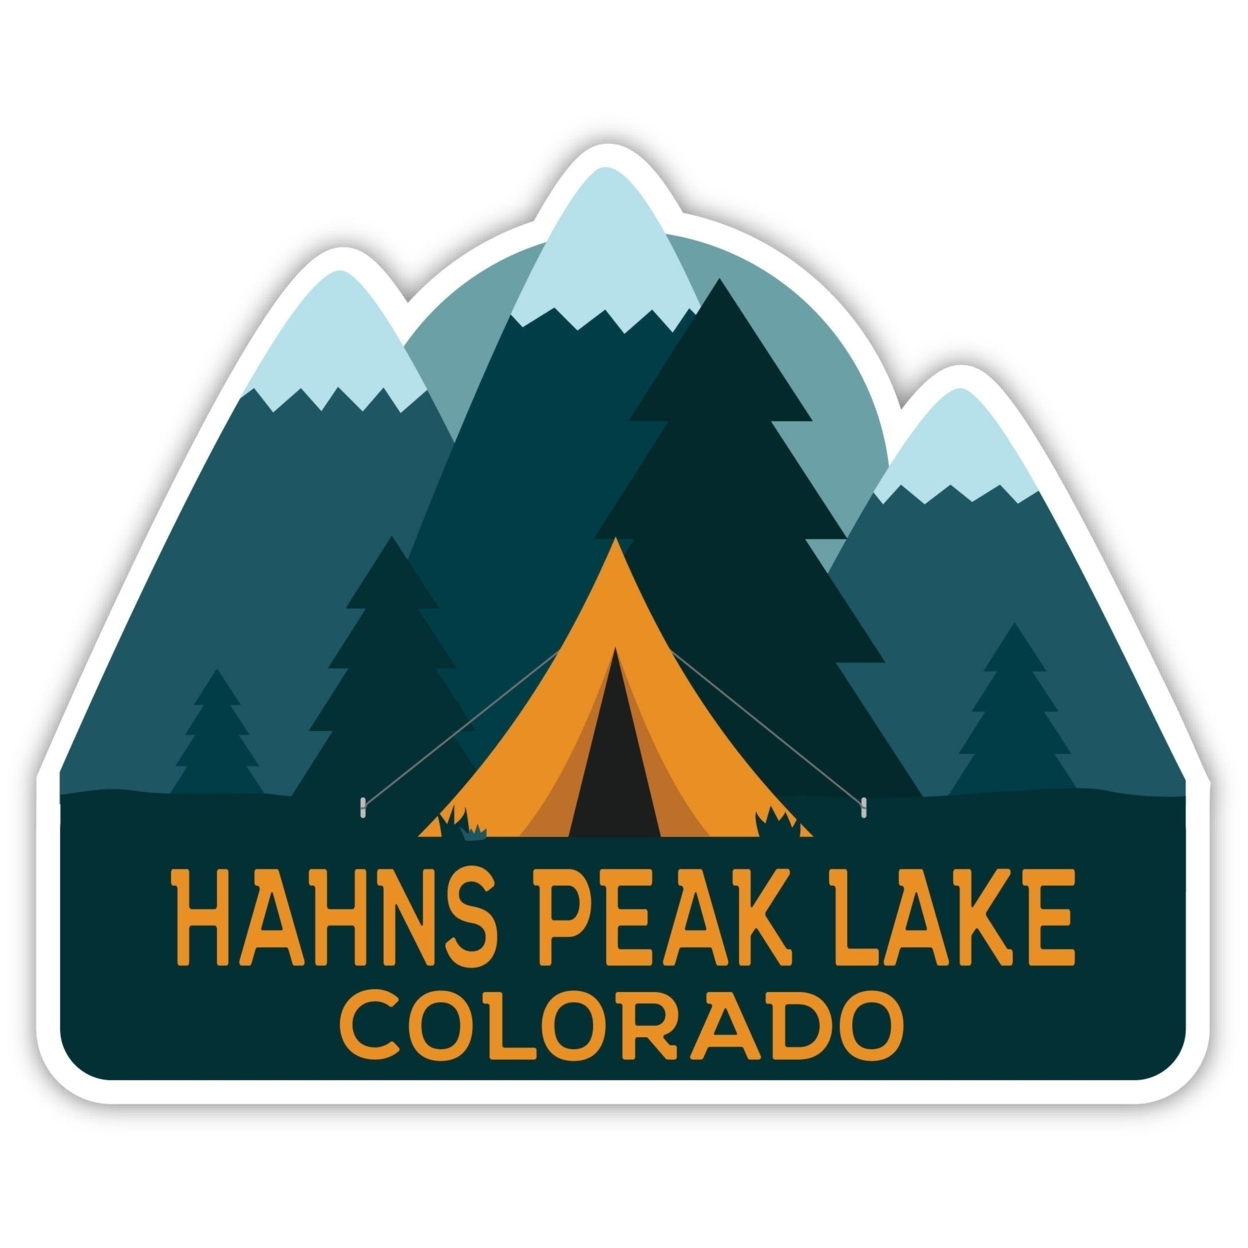 Hahns Peak Lake Colorado Souvenir Decorative Stickers (Choose Theme And Size) - Single Unit, 8-Inch, Tent